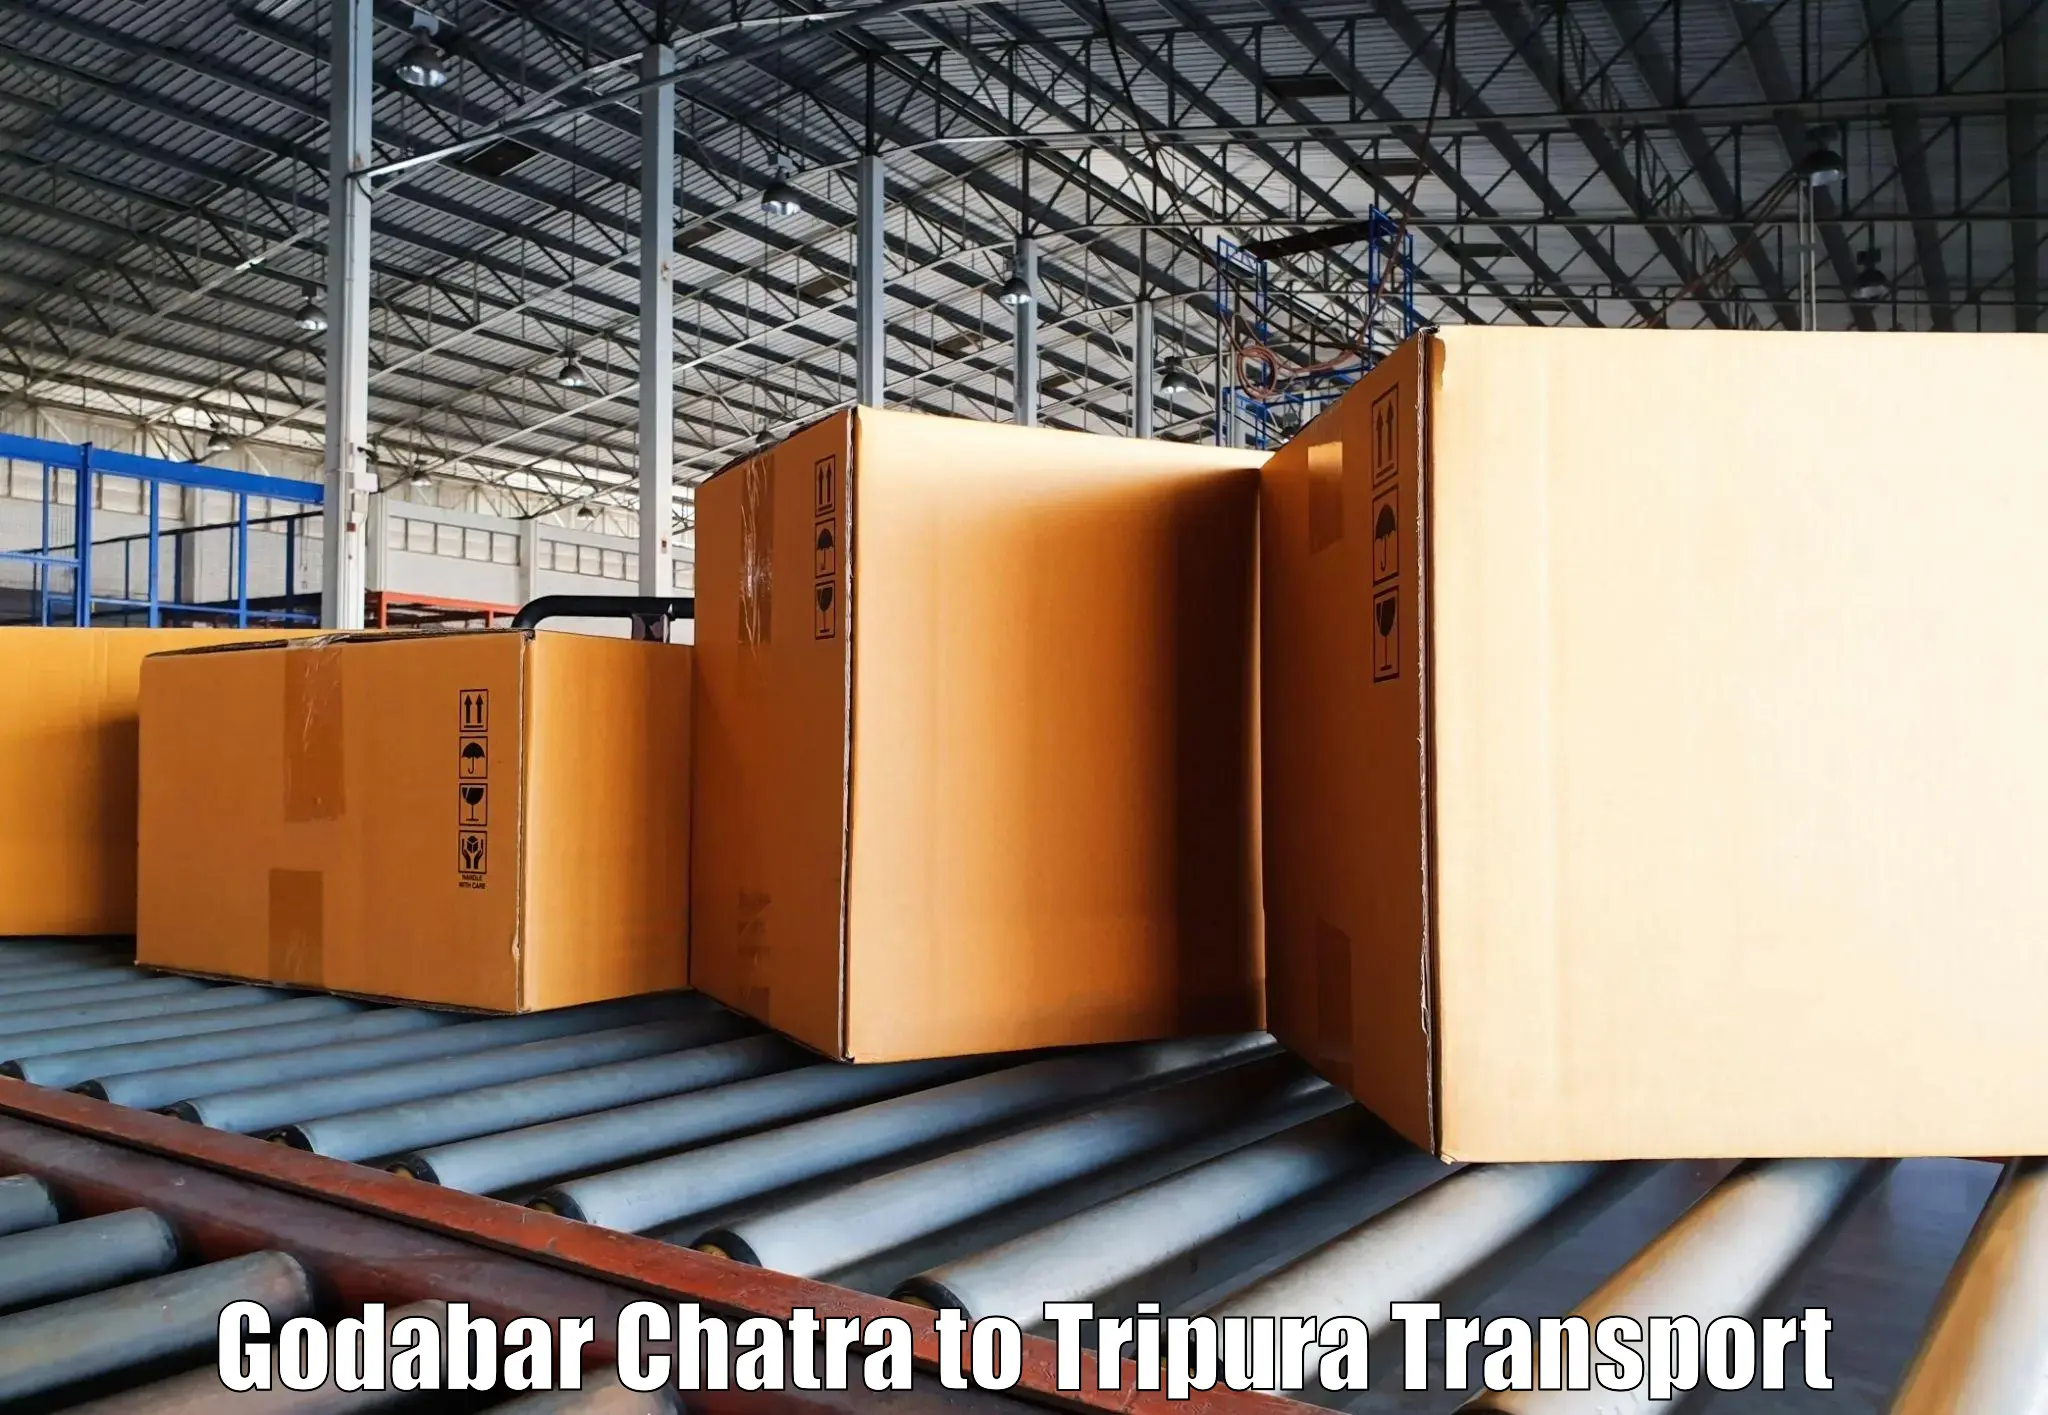 Express transport services Godabar Chatra to Agartala